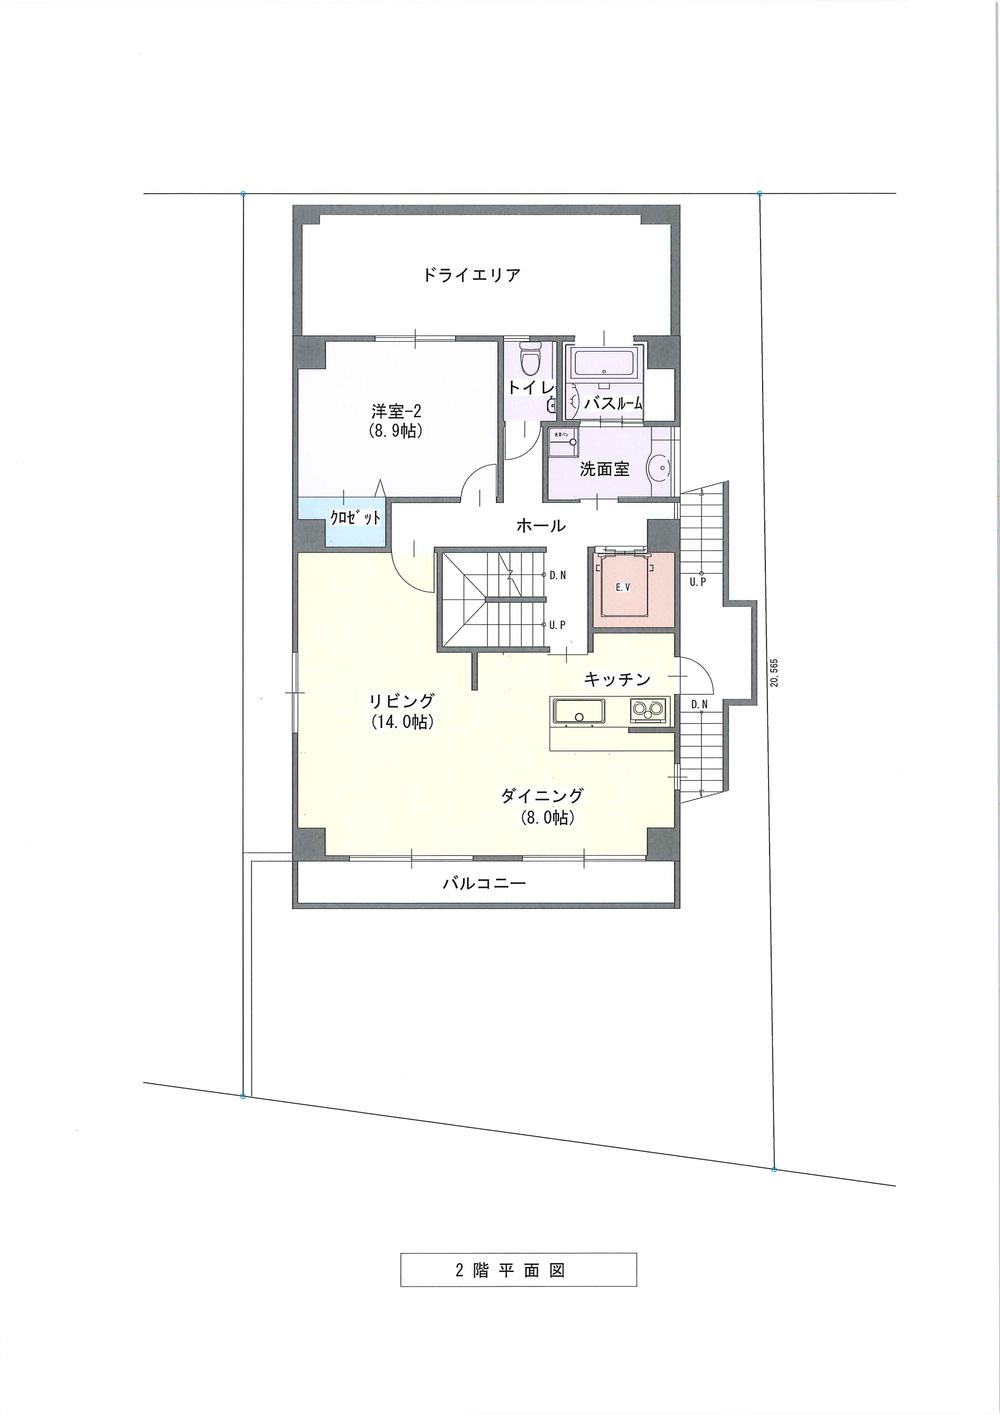 Building plan example (floor plan). 2F